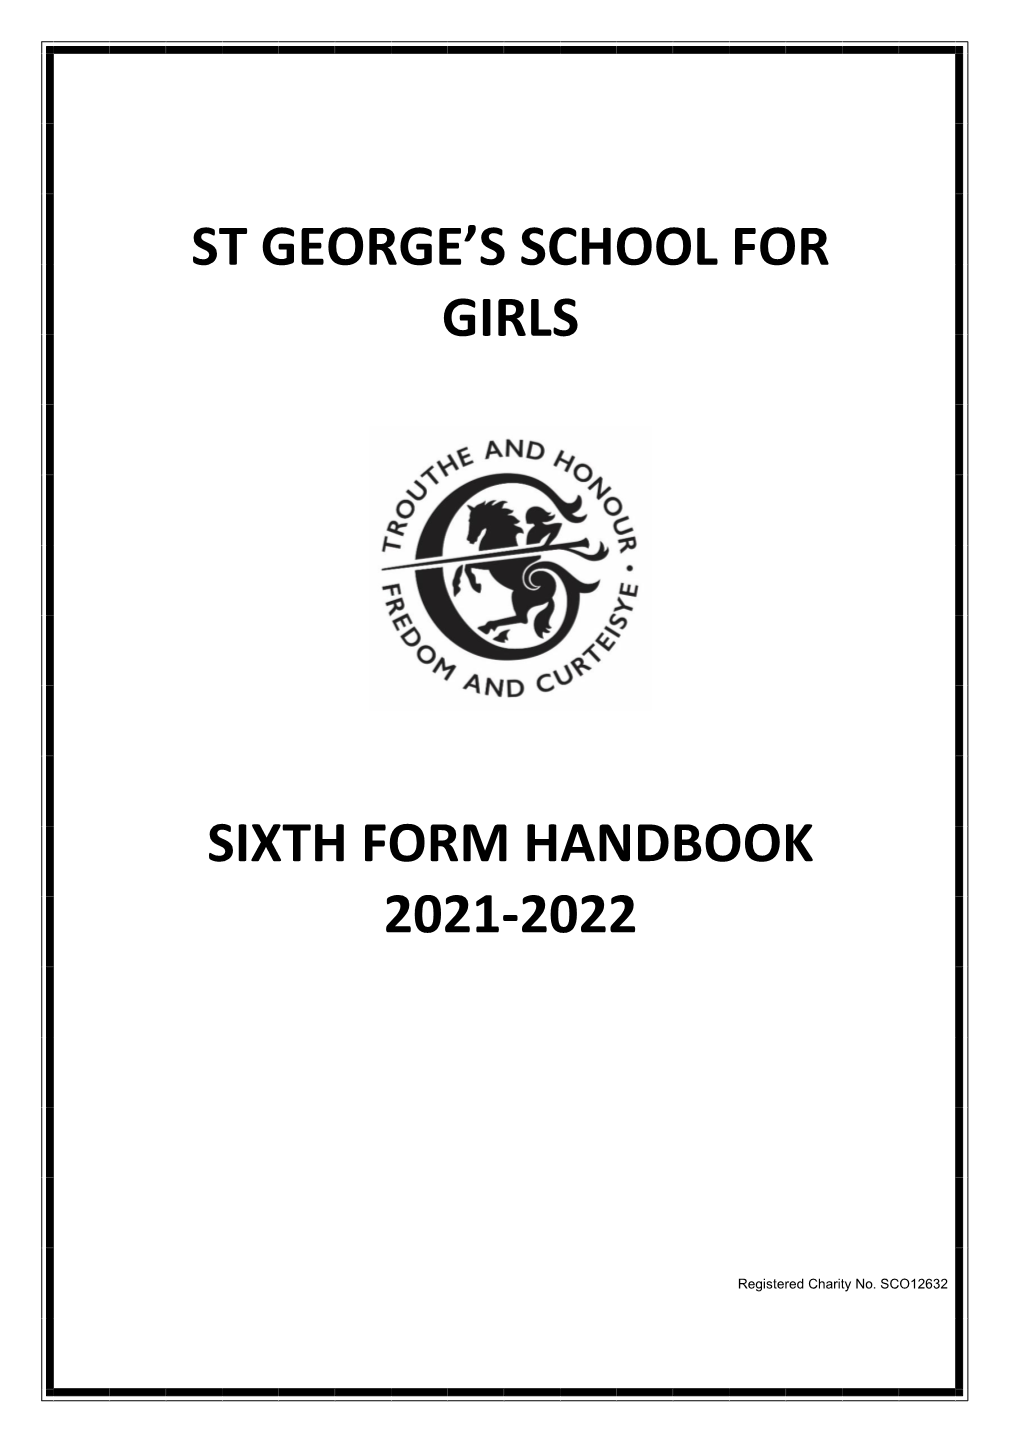 Sixth Form Handbook 2021-2022